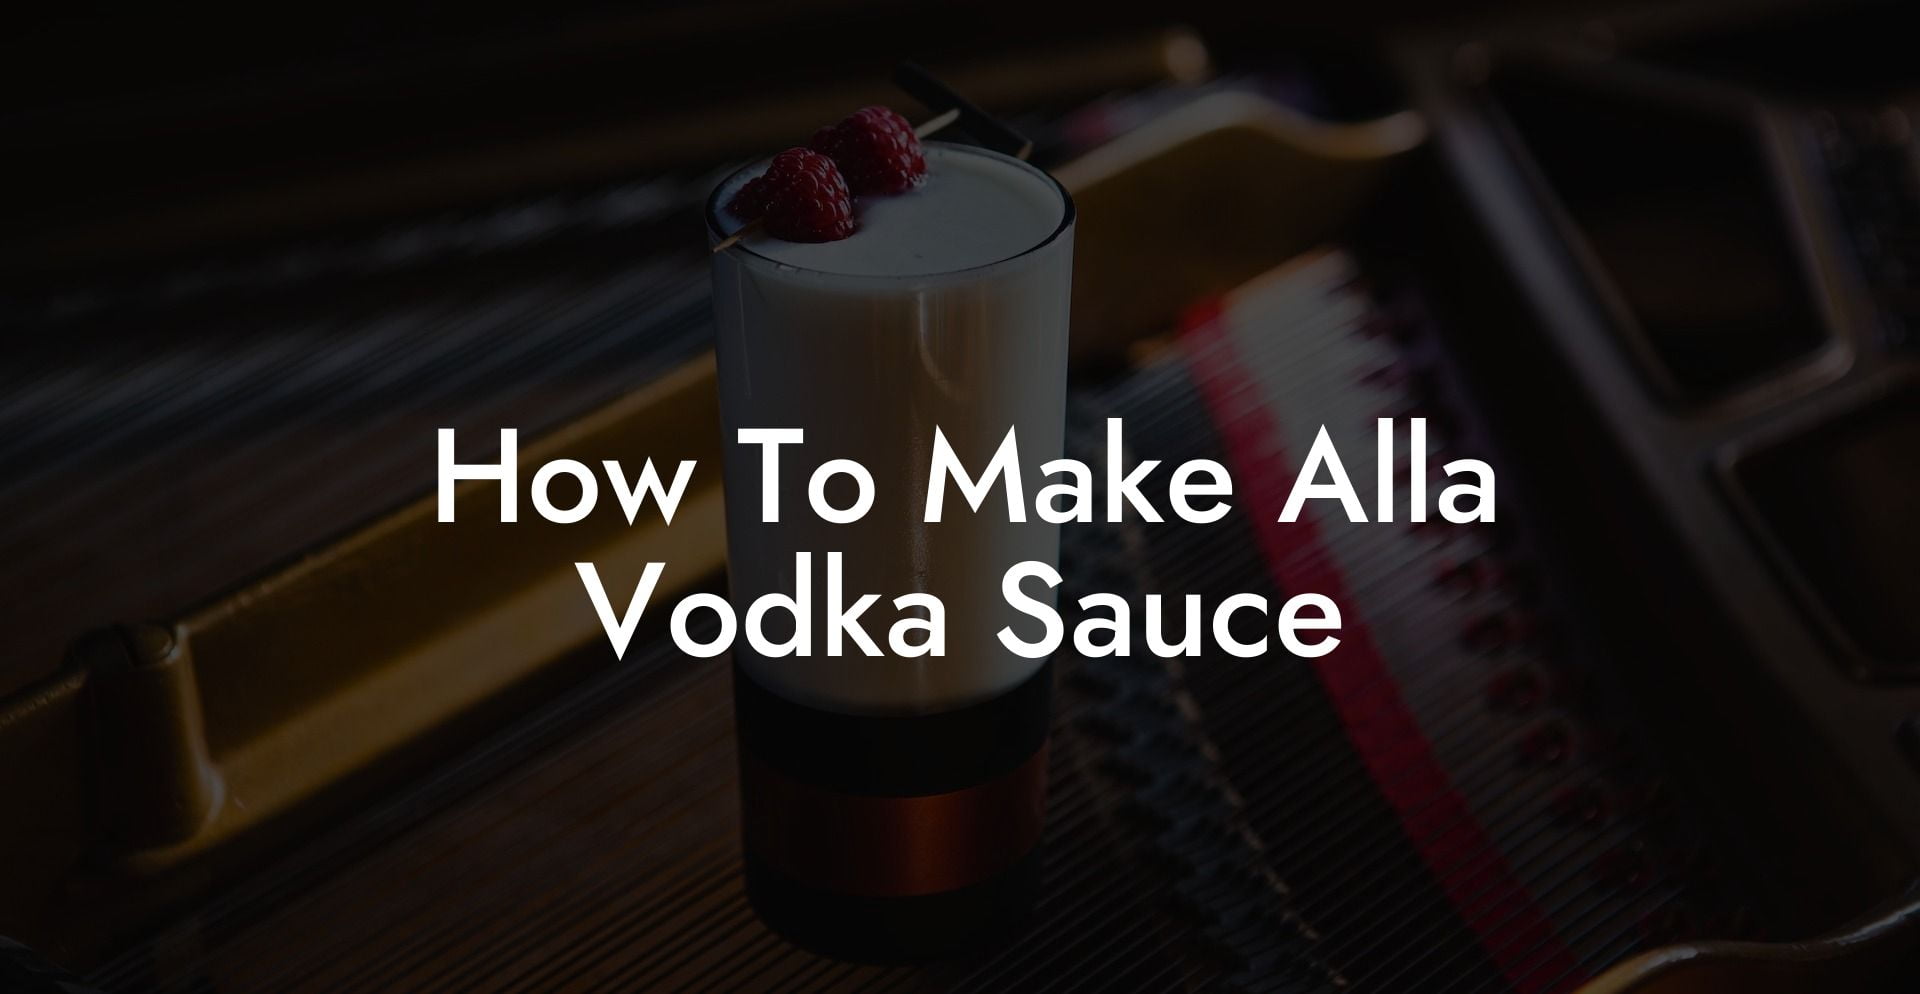 How To Make Alla Vodka Sauce